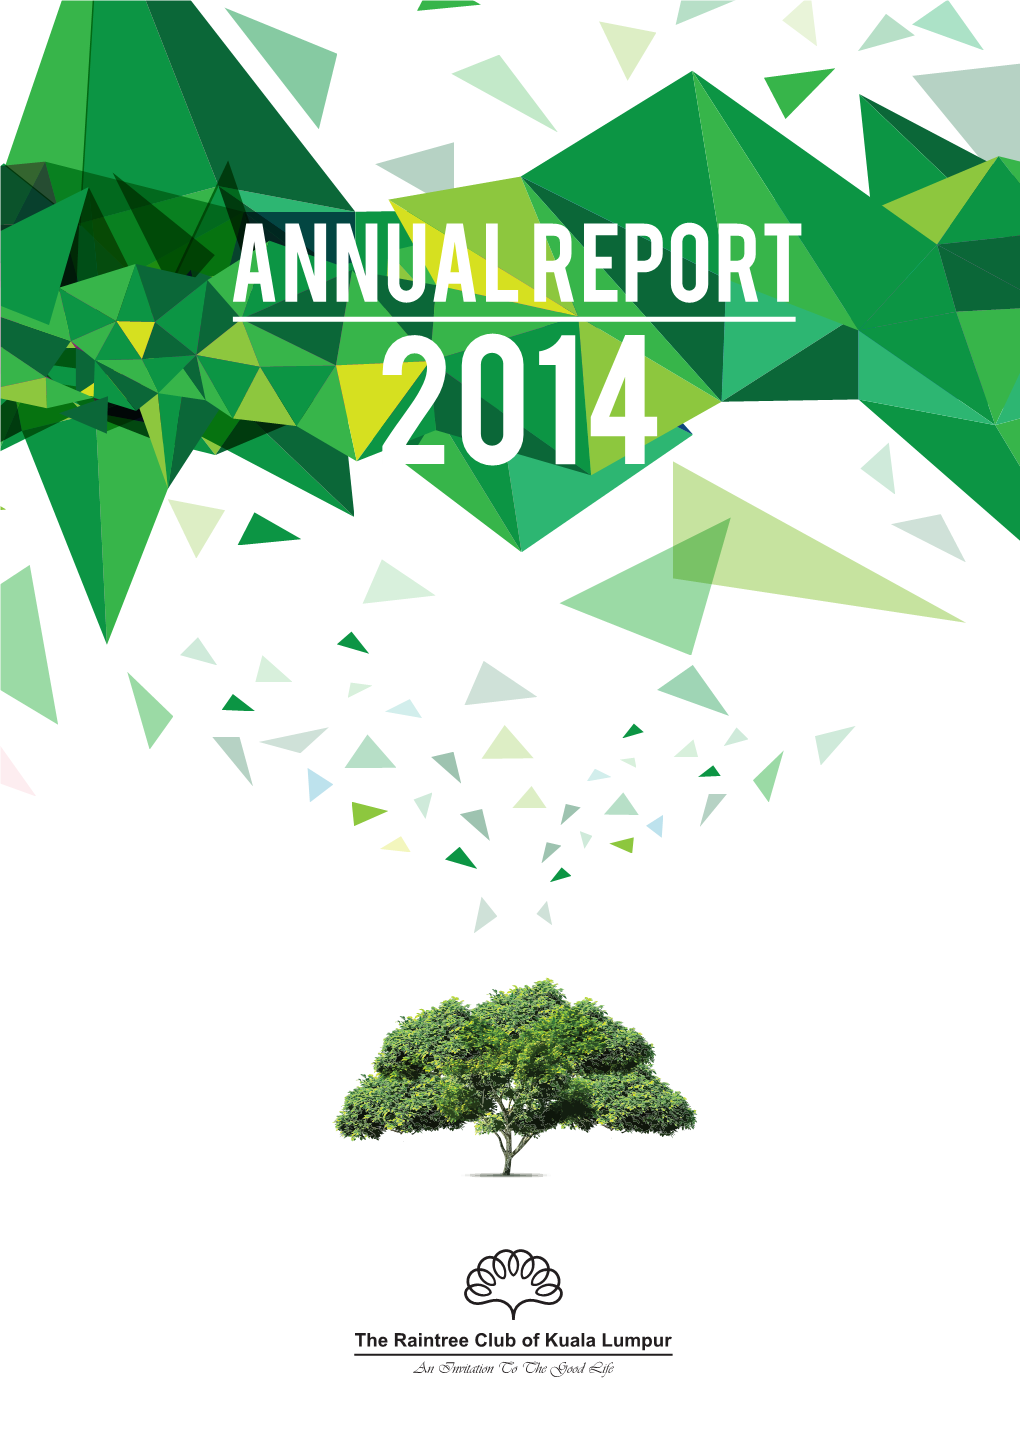 Raintree Club Annual Report 2014